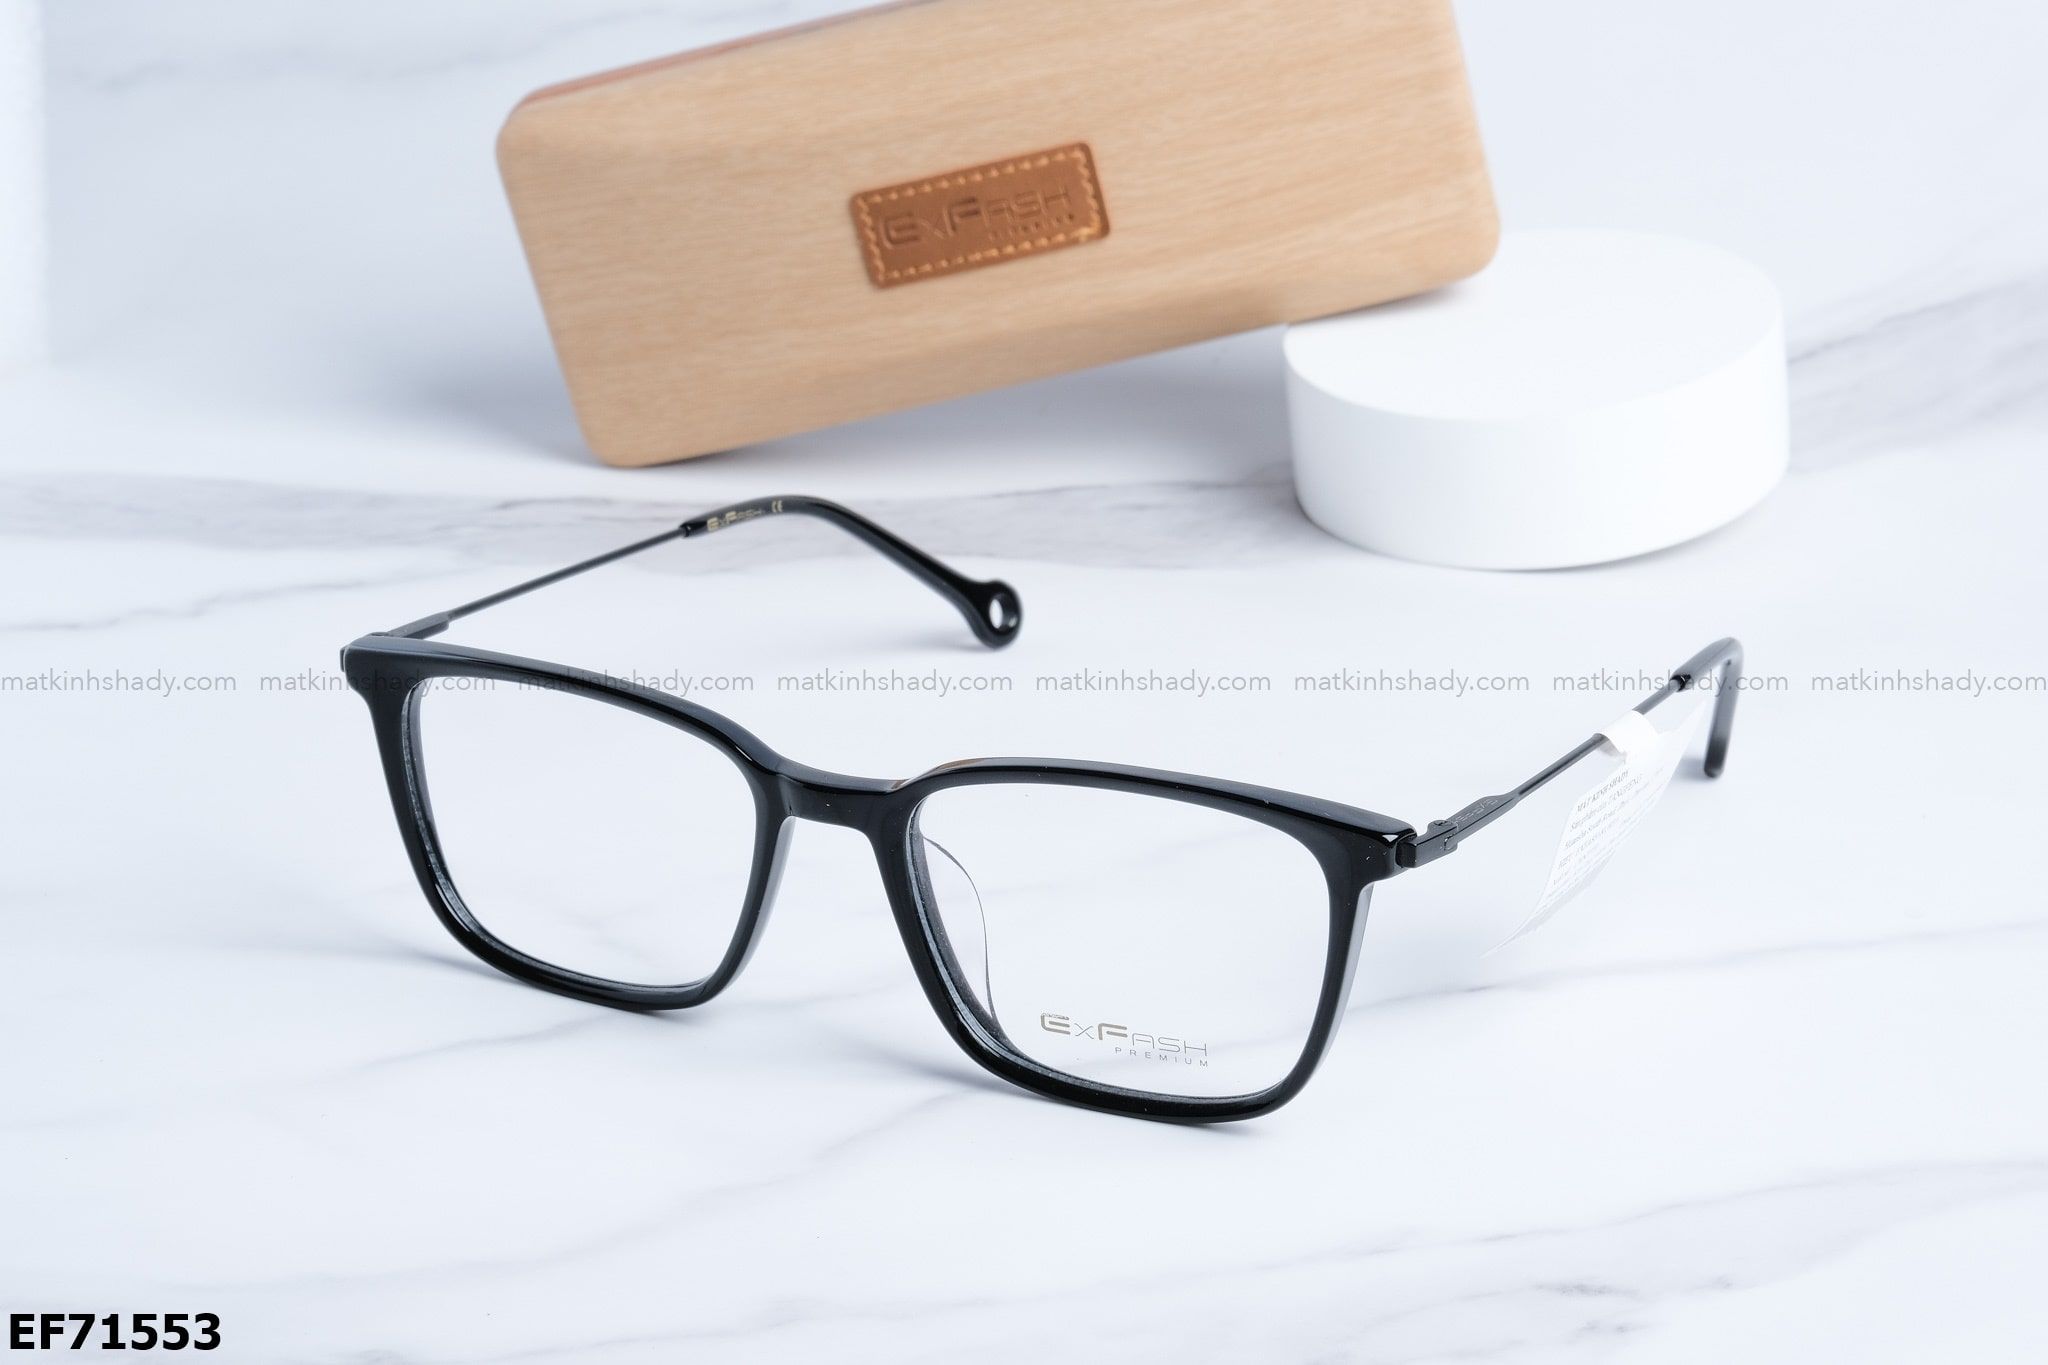  Exfash Eyewear - Glasses - EF71553 